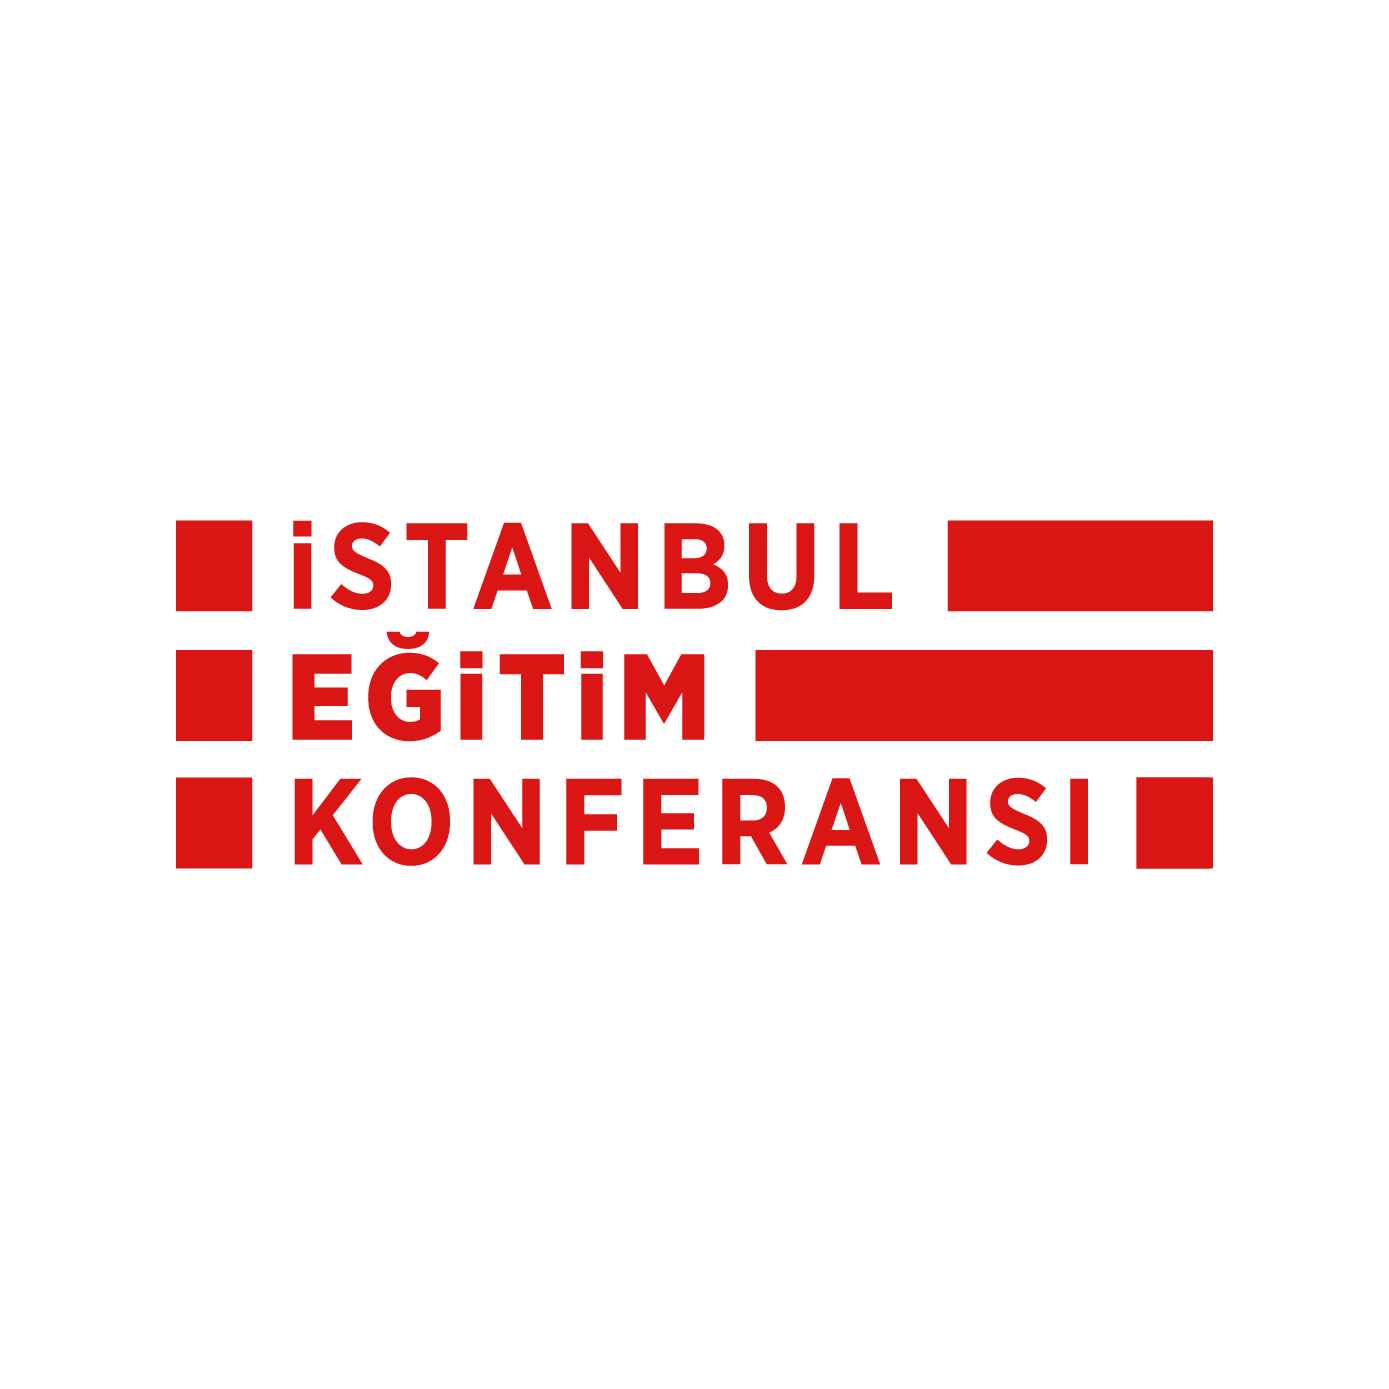 İstanbul Eğitim Konferansı